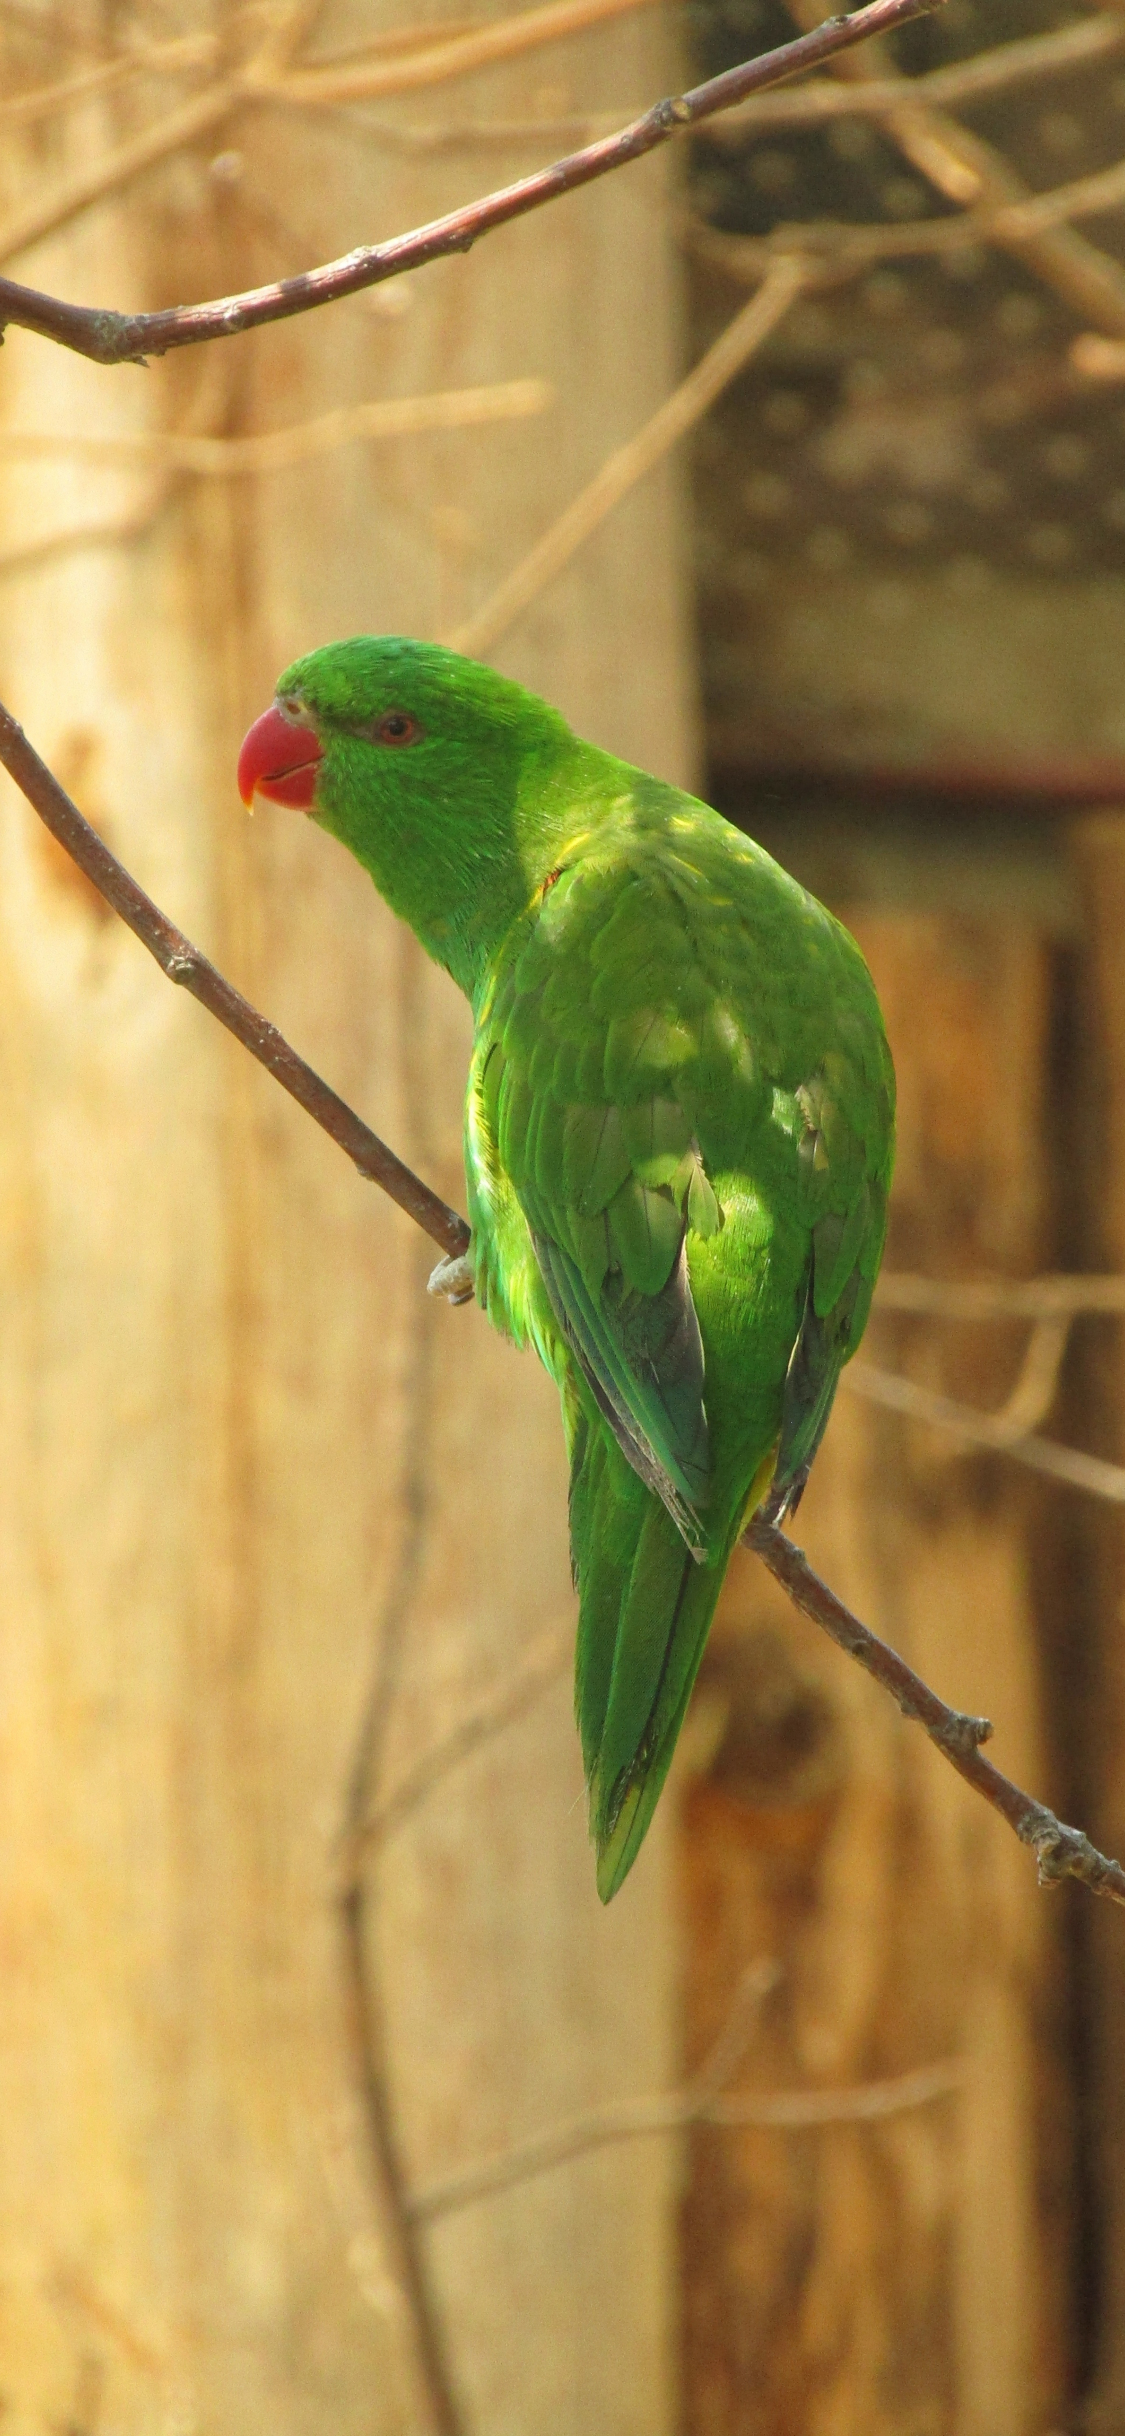 Download wallpaper 1125x2436 green parrot, adorable, bird, iphone x,  1125x2436 hd background, 7870